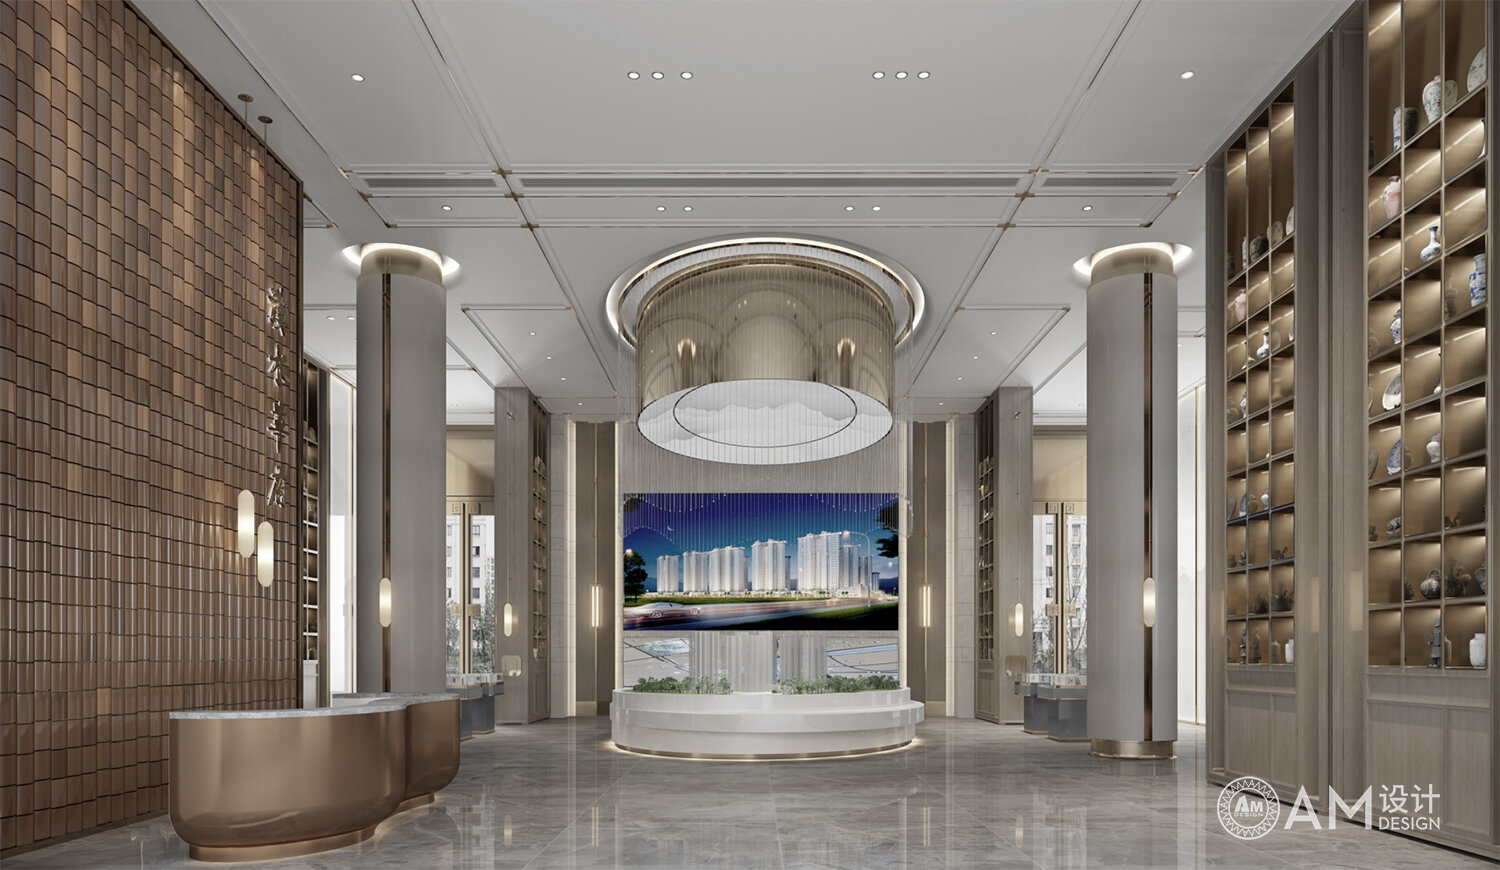 AM DESIGN | Lobby design of the sales office of Hanshui Huafu, Shaanxi